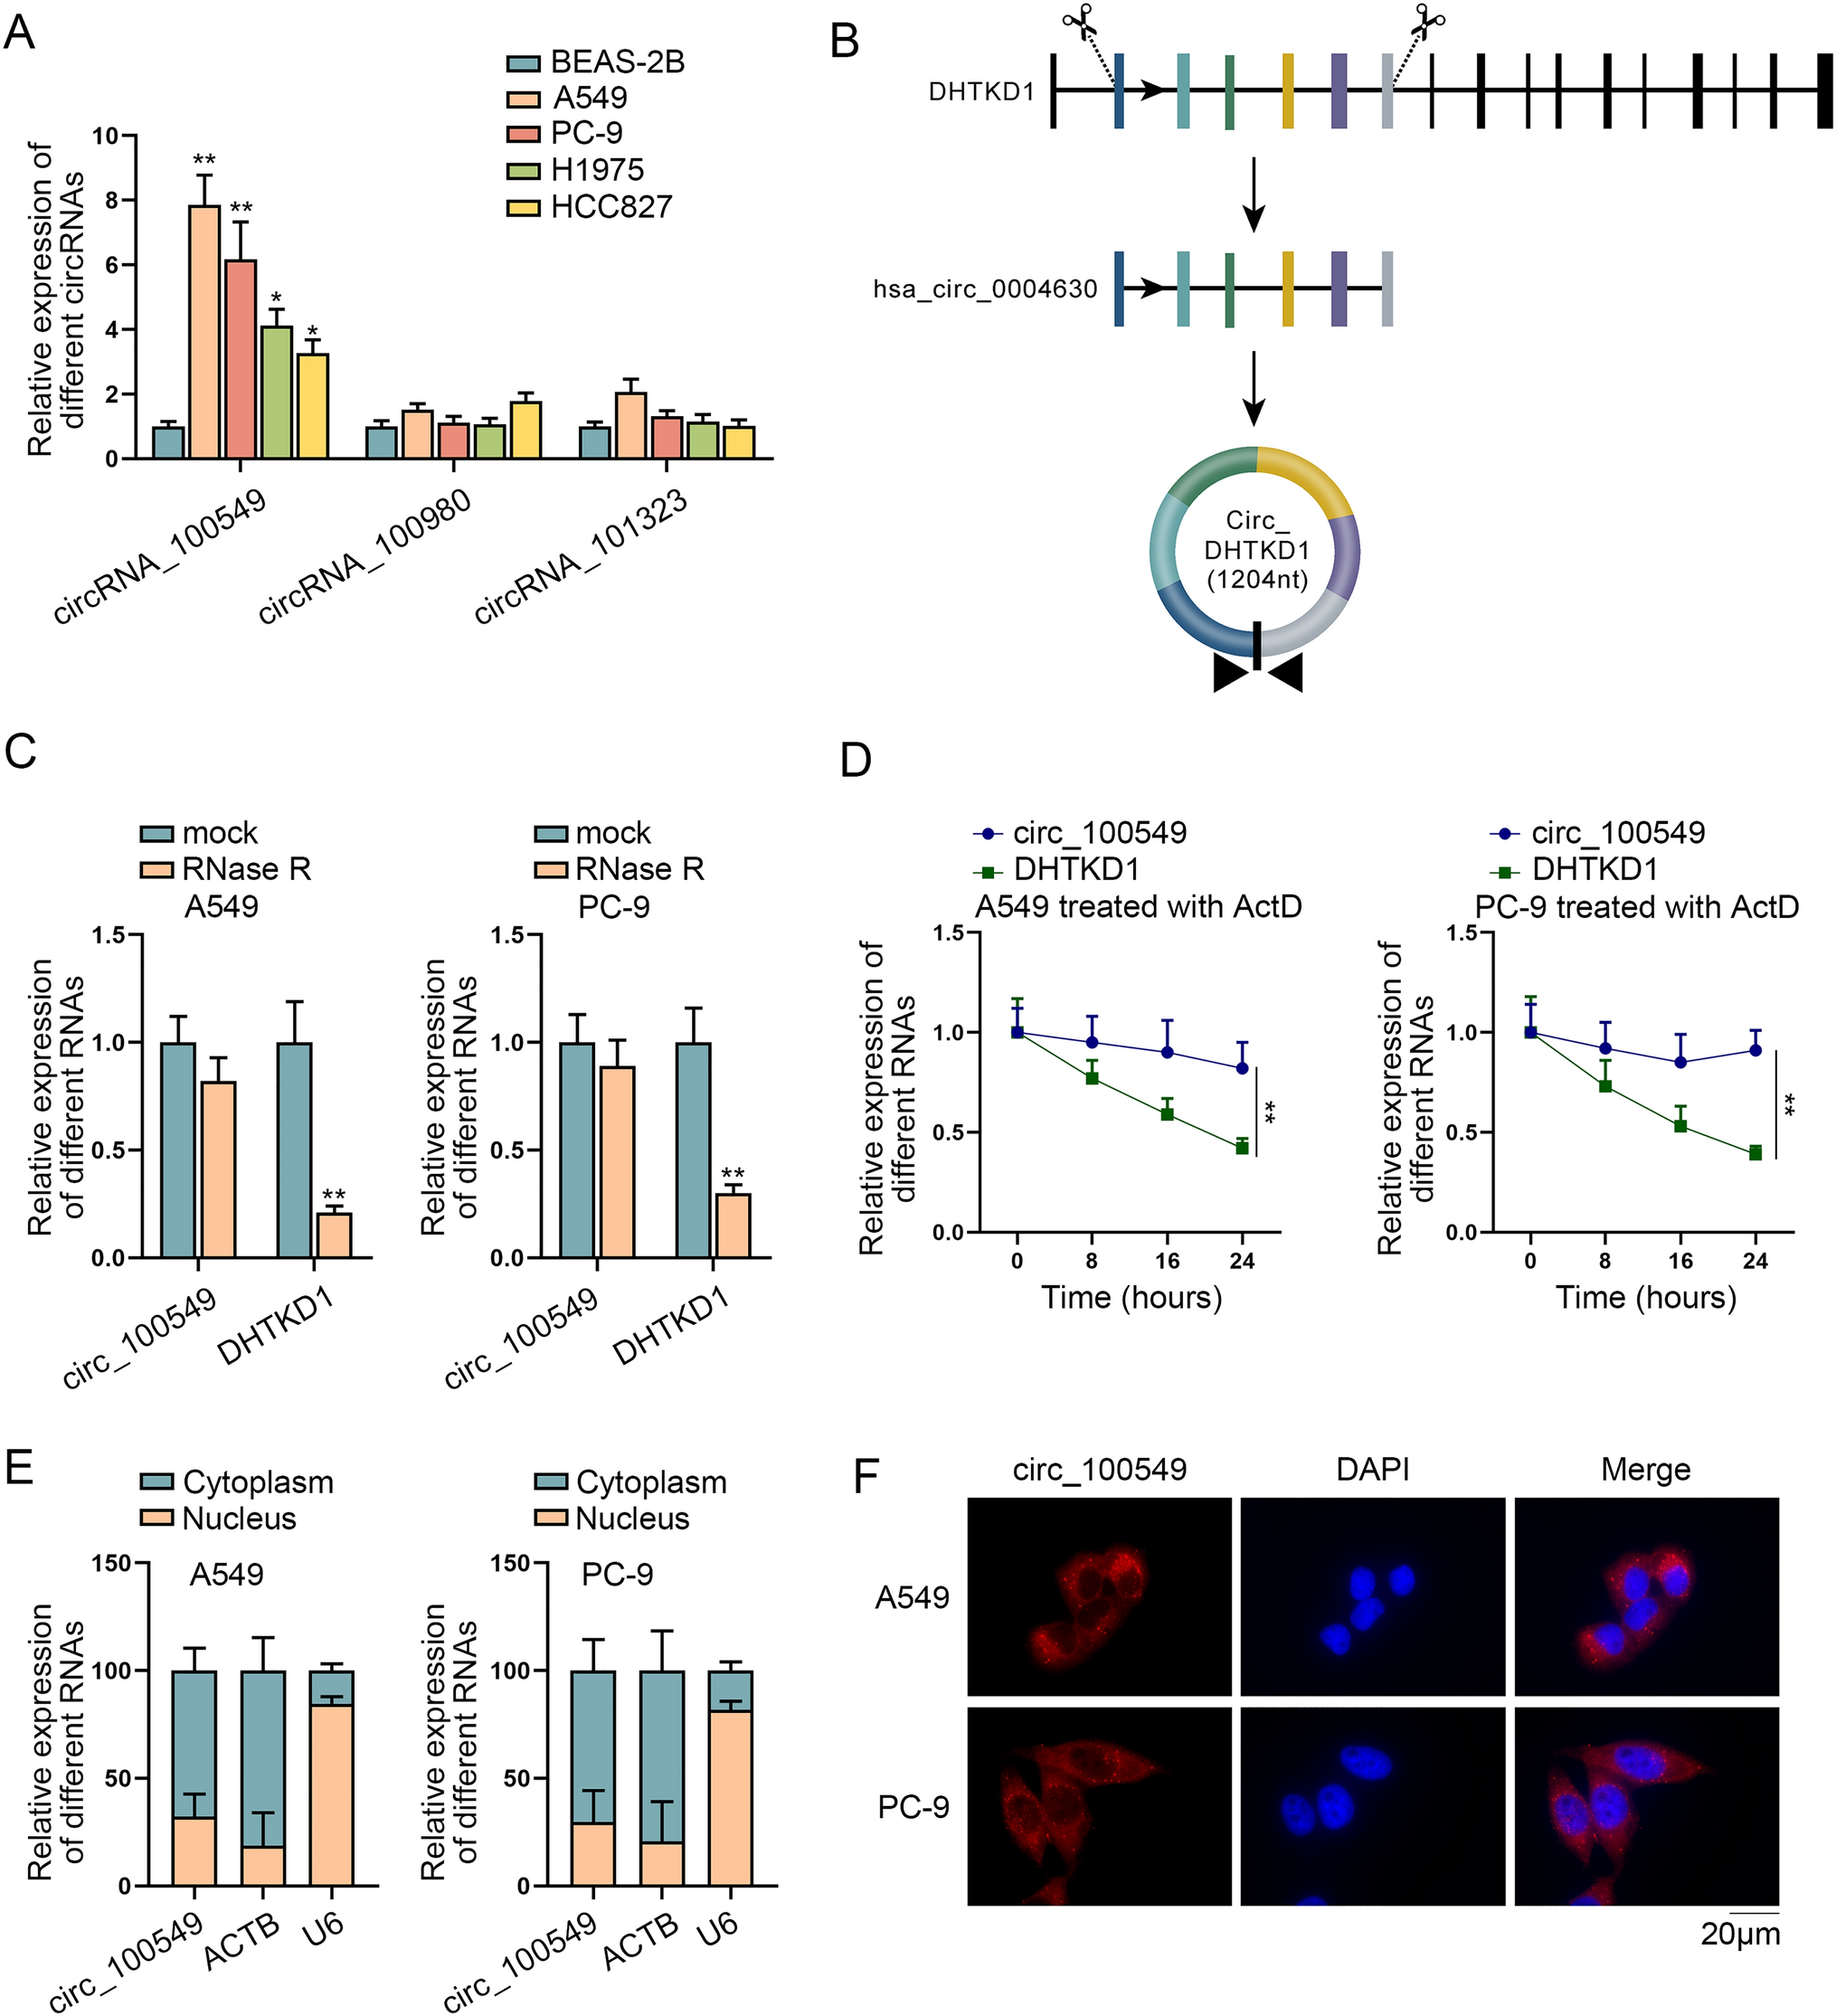 Circ_100549 promotes tumor progression in lung adenocarcinoma through upregulation of BIRC6